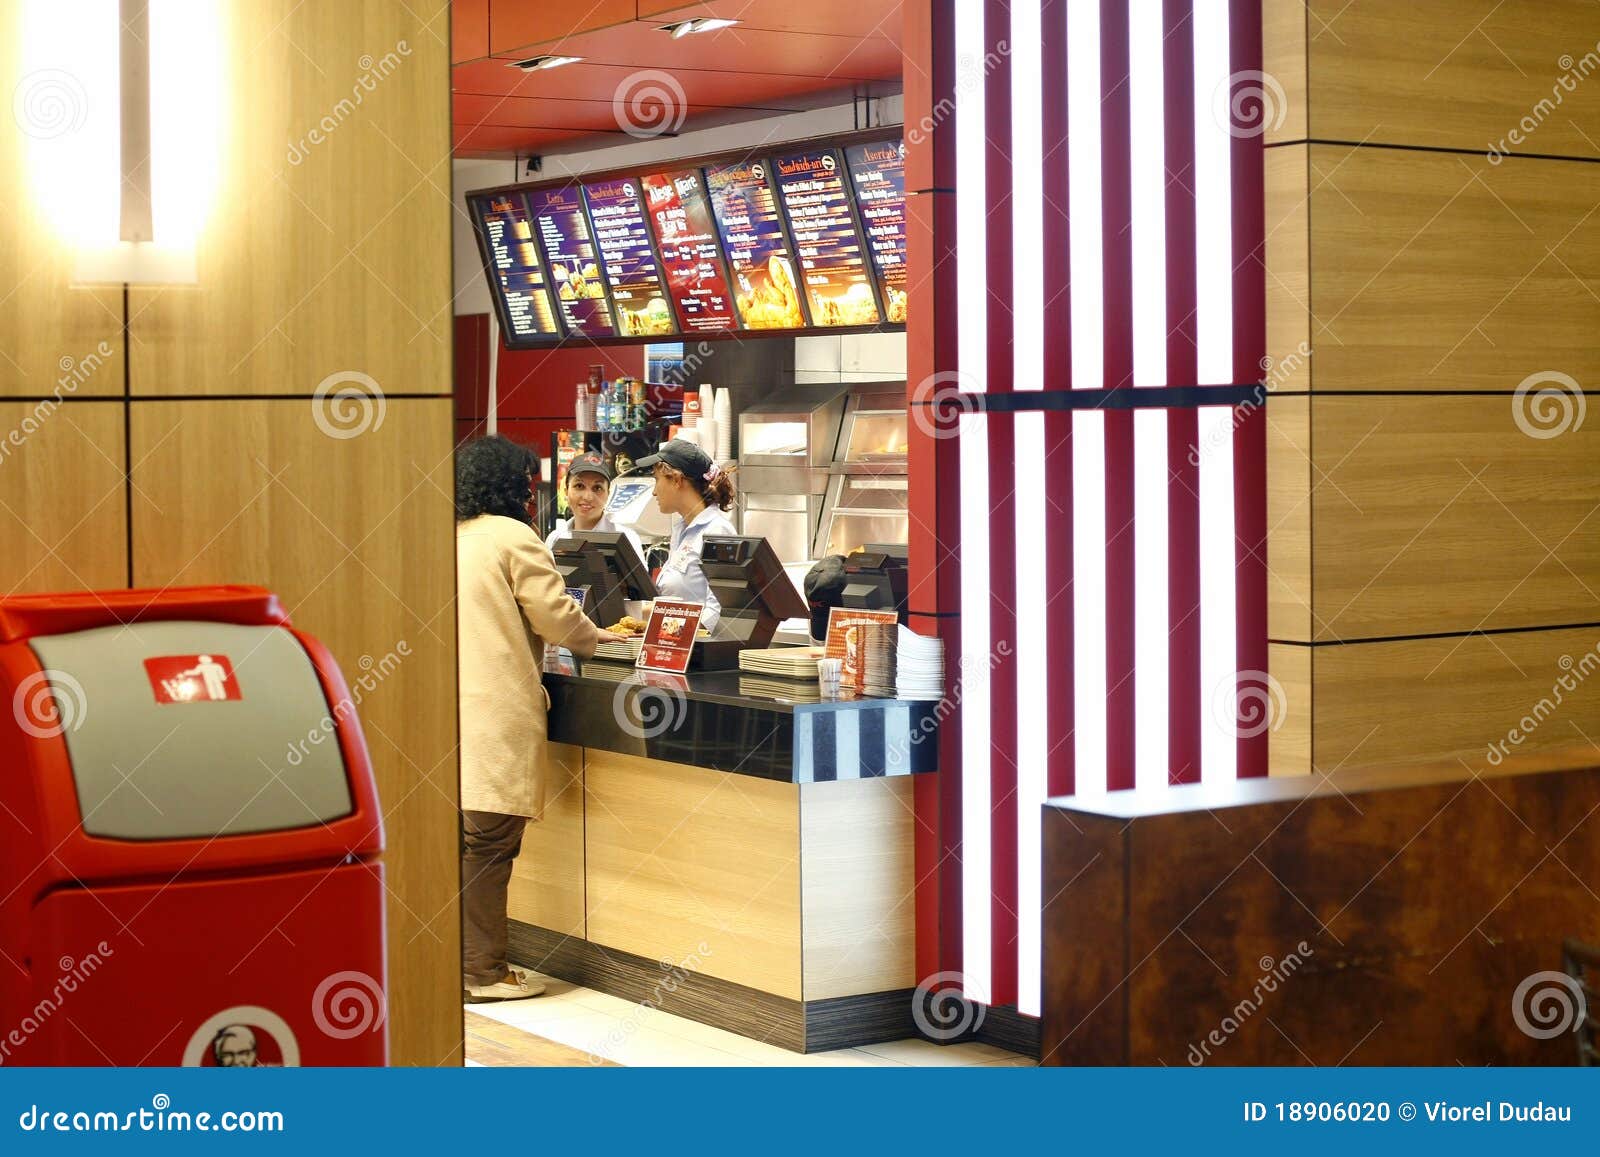 Fast Food Restaurant Interior